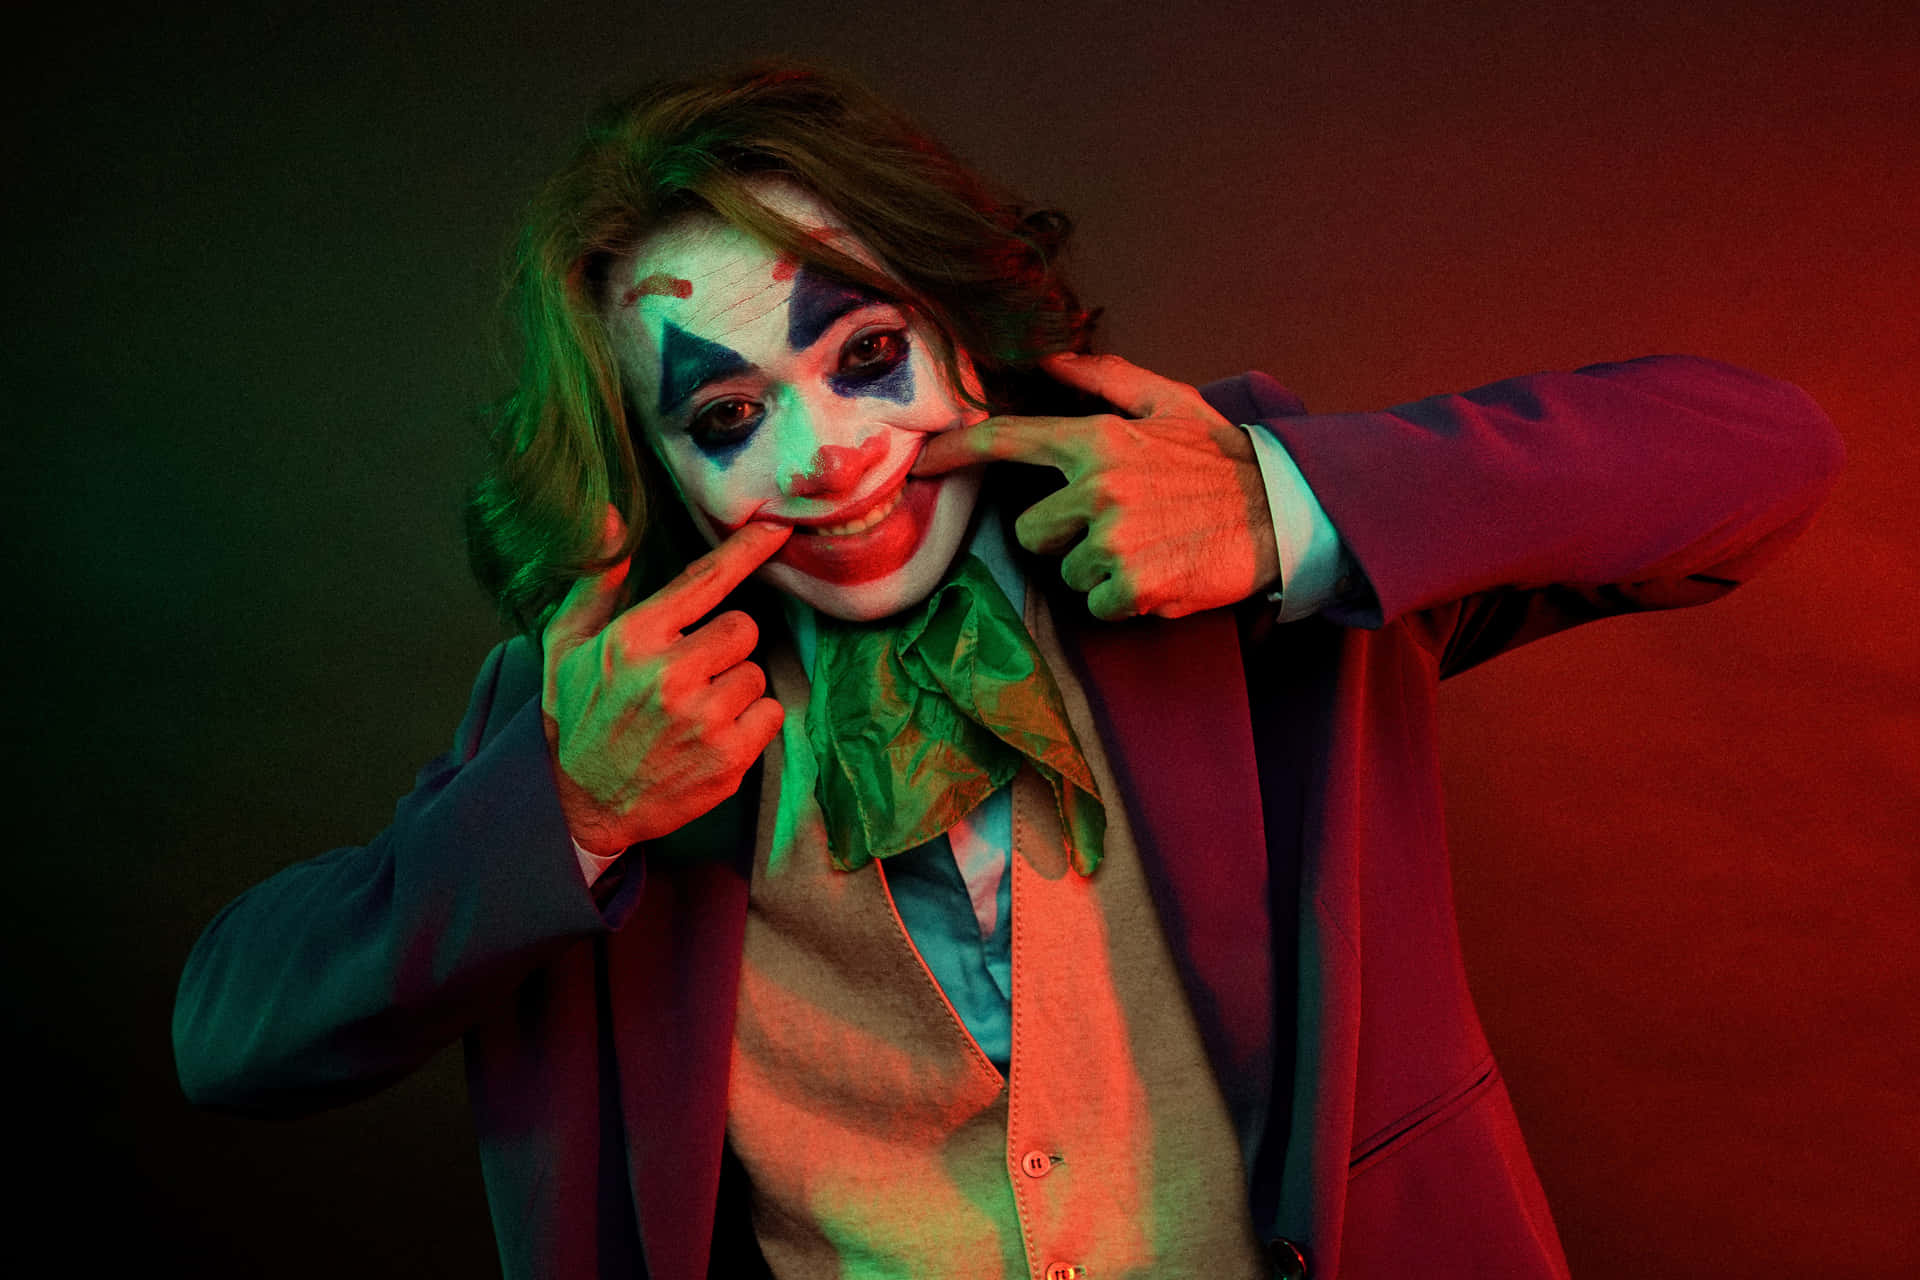 Cool Joker Under Dramatic Lighting